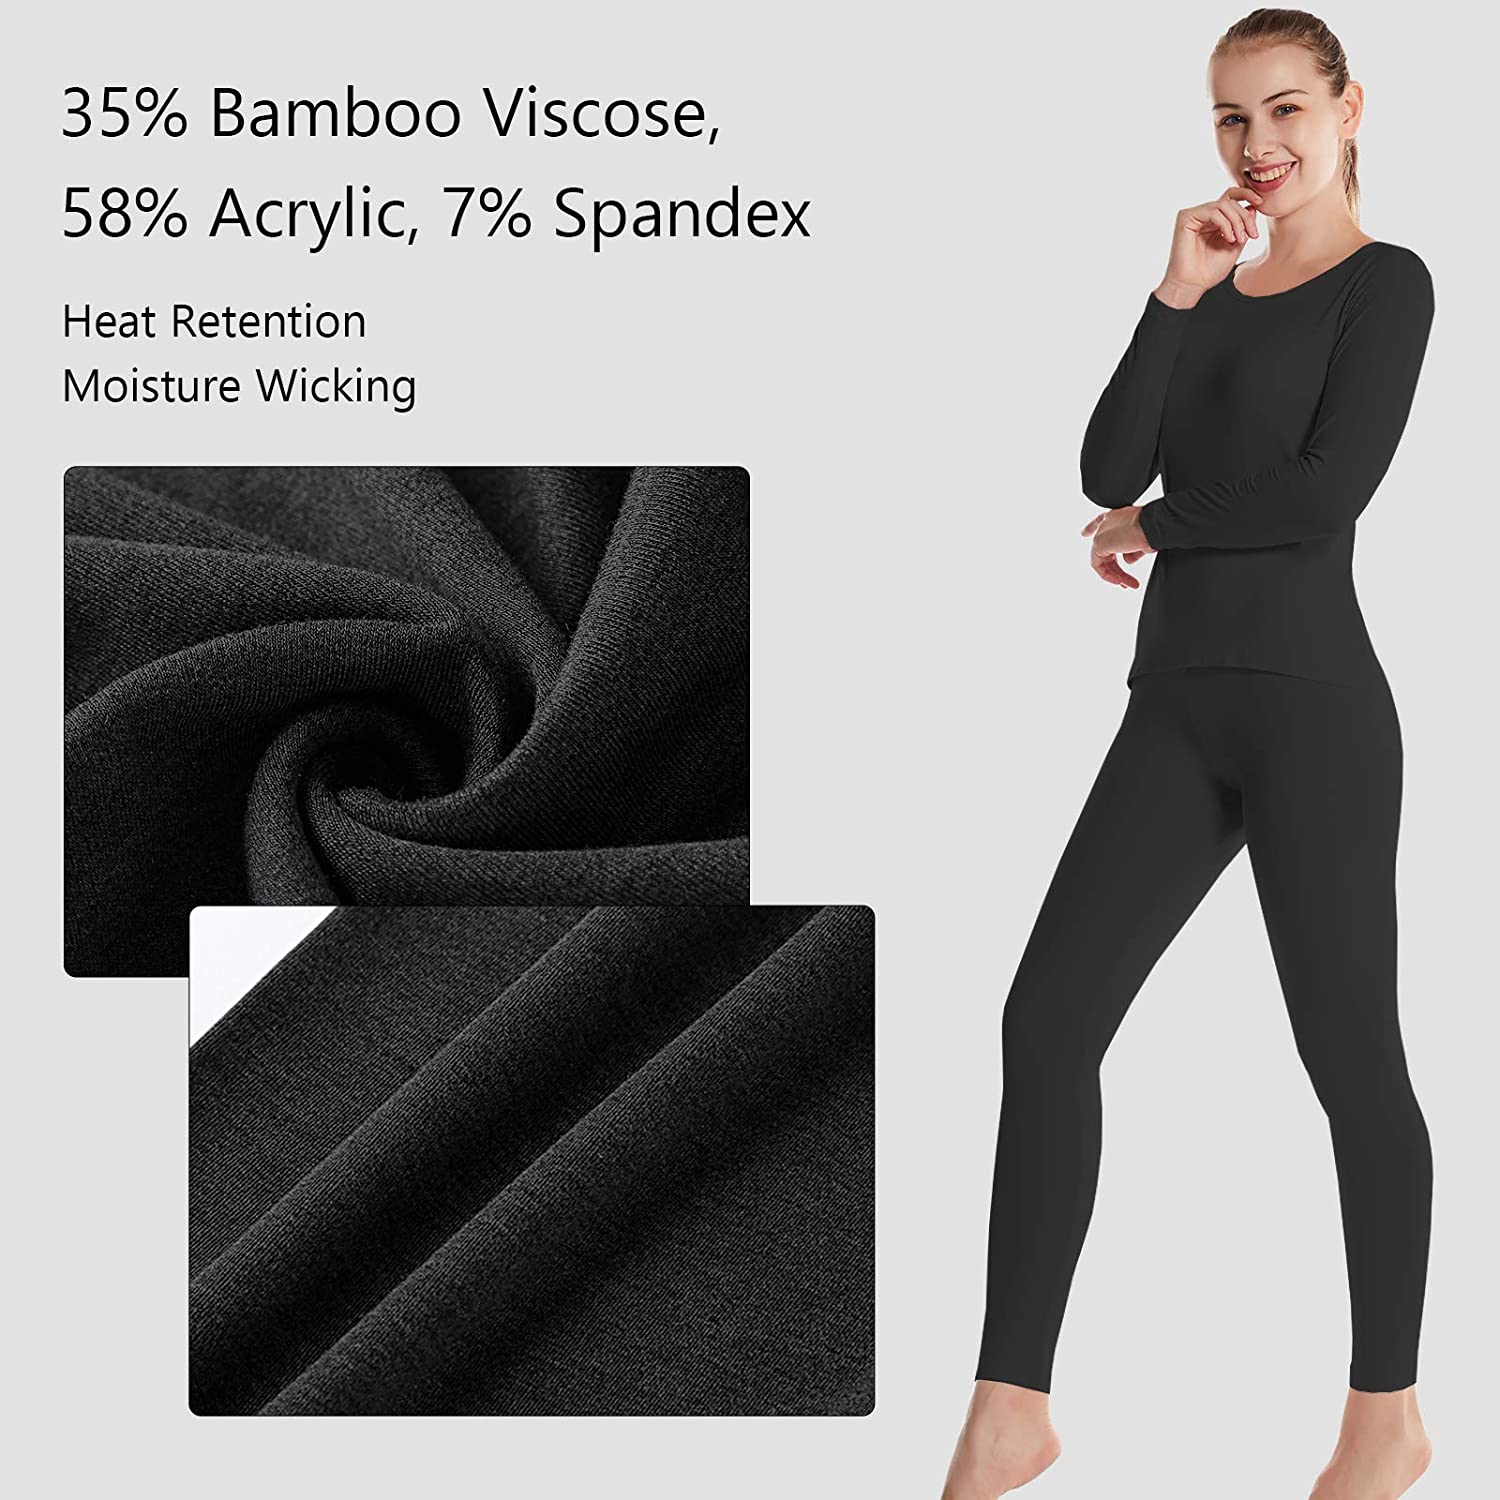 BAMBOOL Cool Women's Thermal Underwear Set Bamboo Viscose | eBay